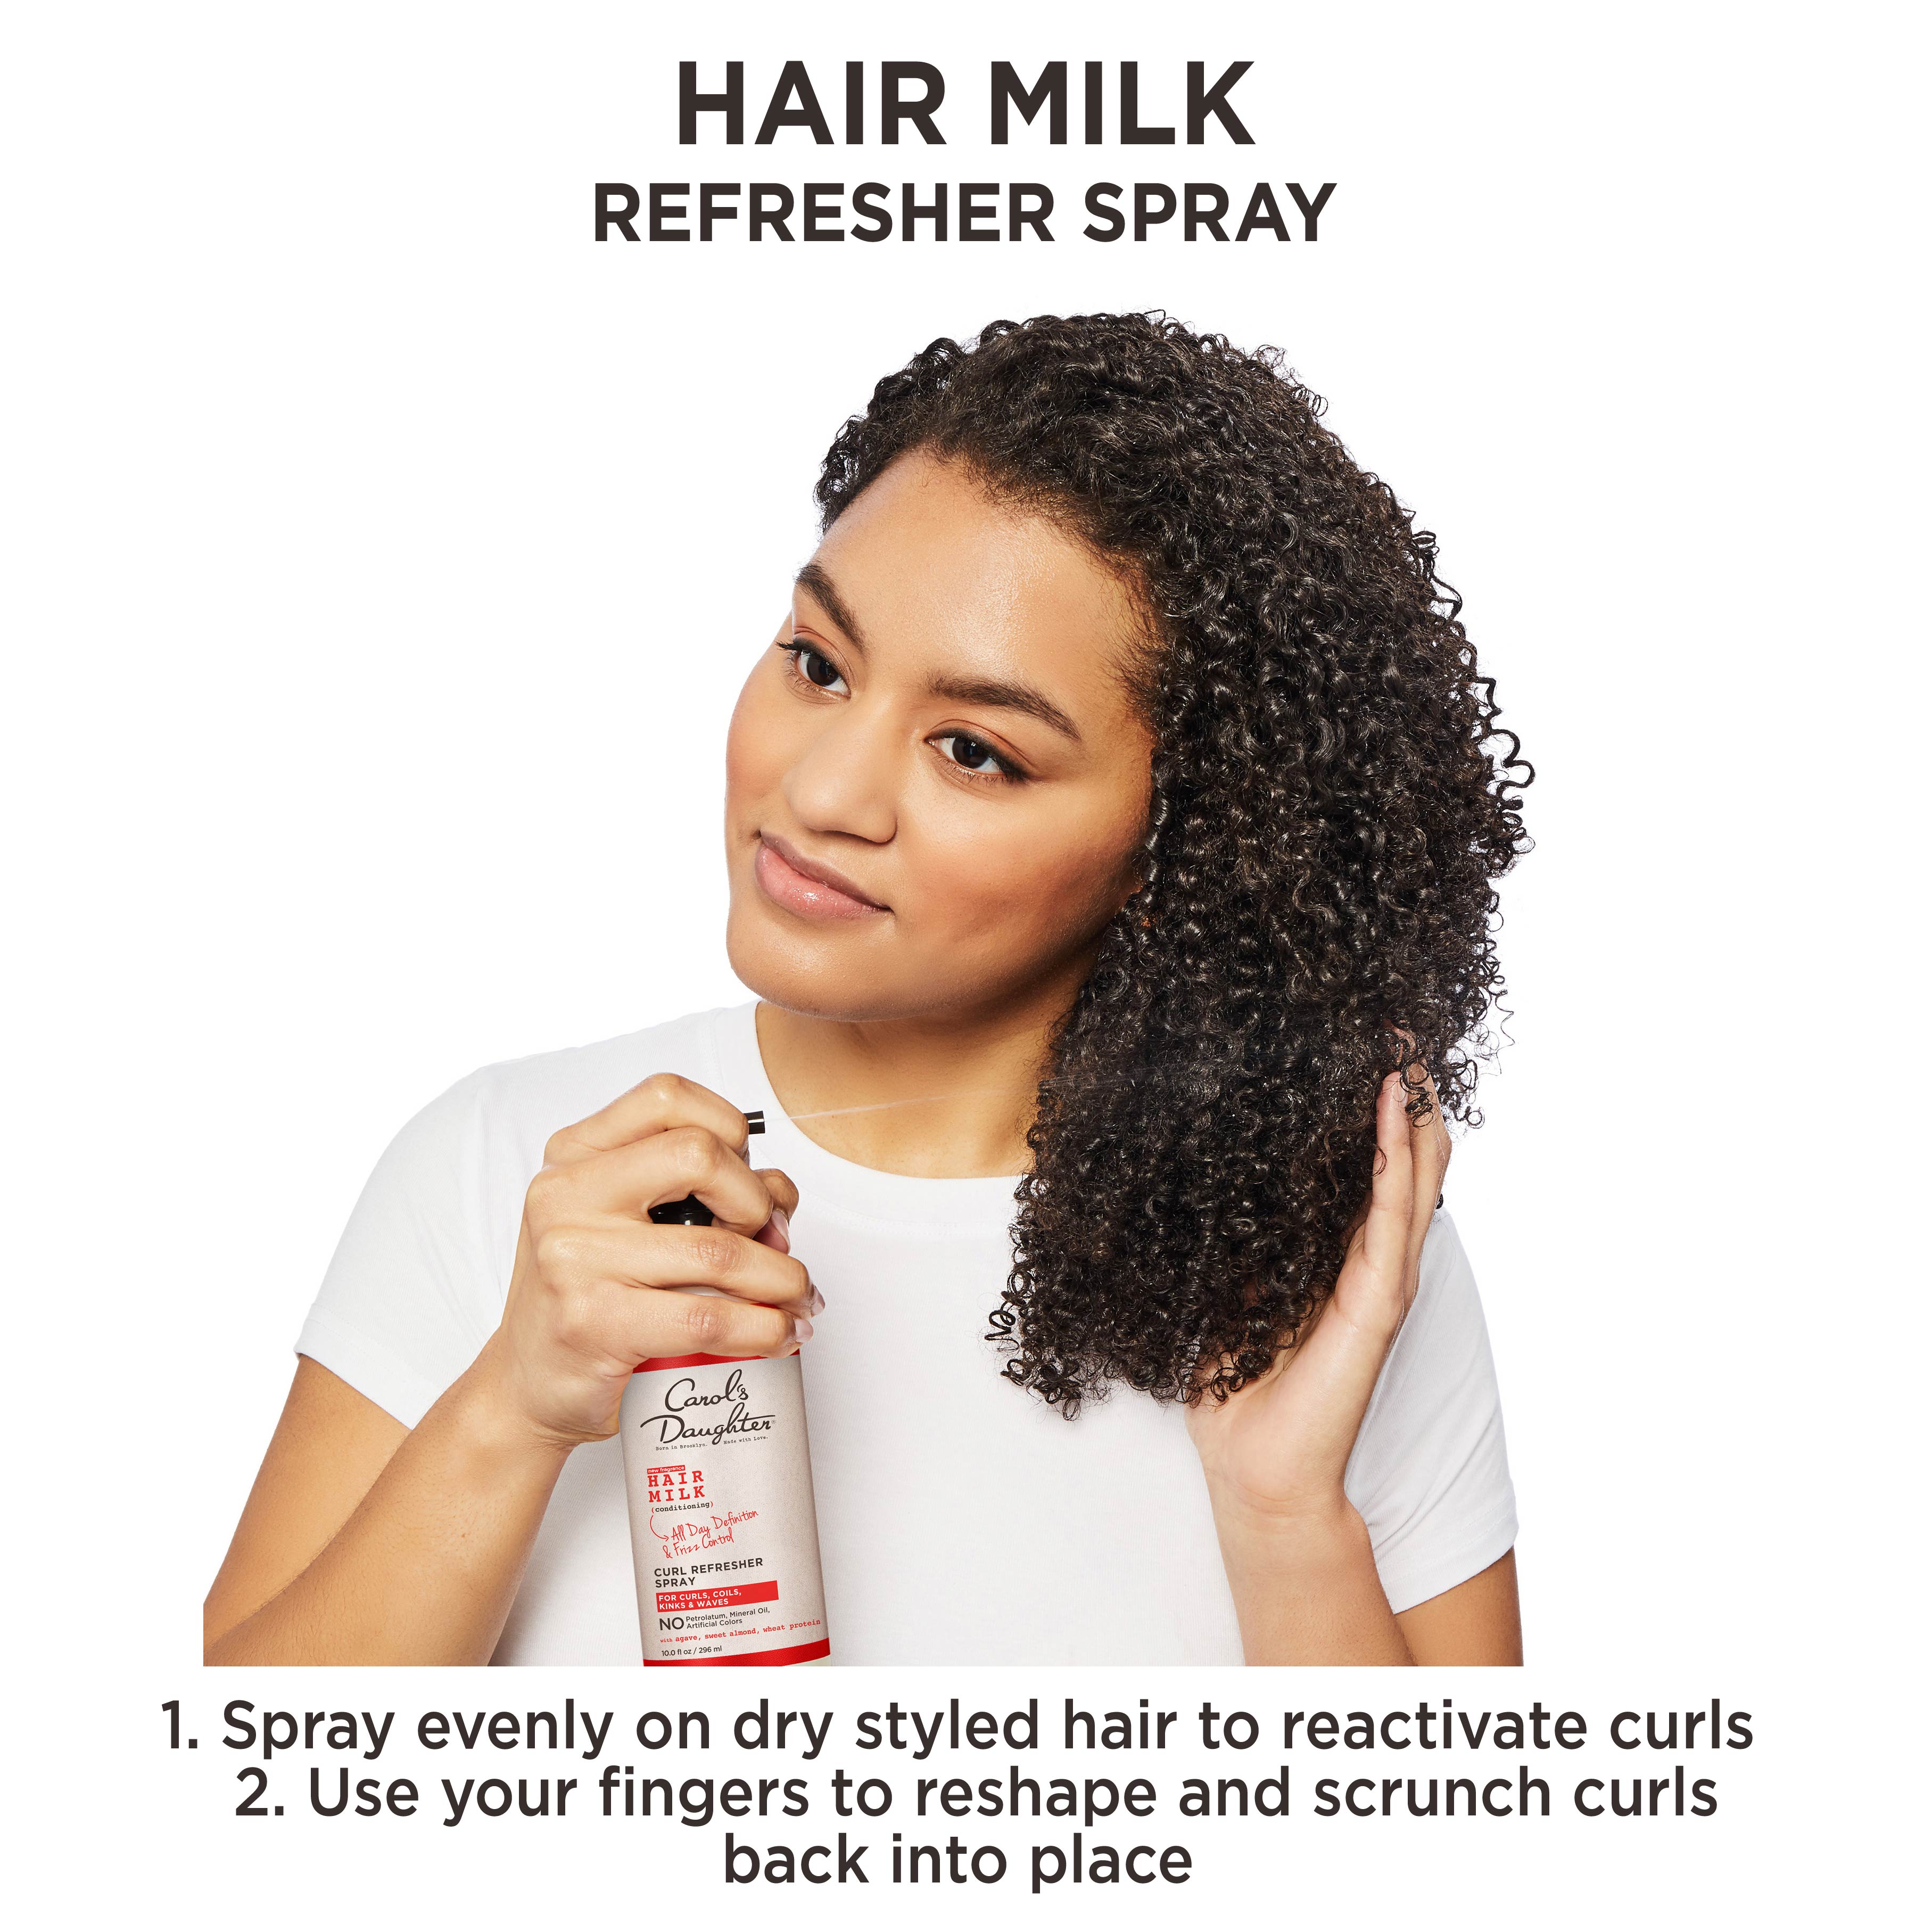 Carol's Daughter Hair Milk Moisturizing Shine Enhancing Refresher Hair Spray, 10 fl oz - image 5 of 11